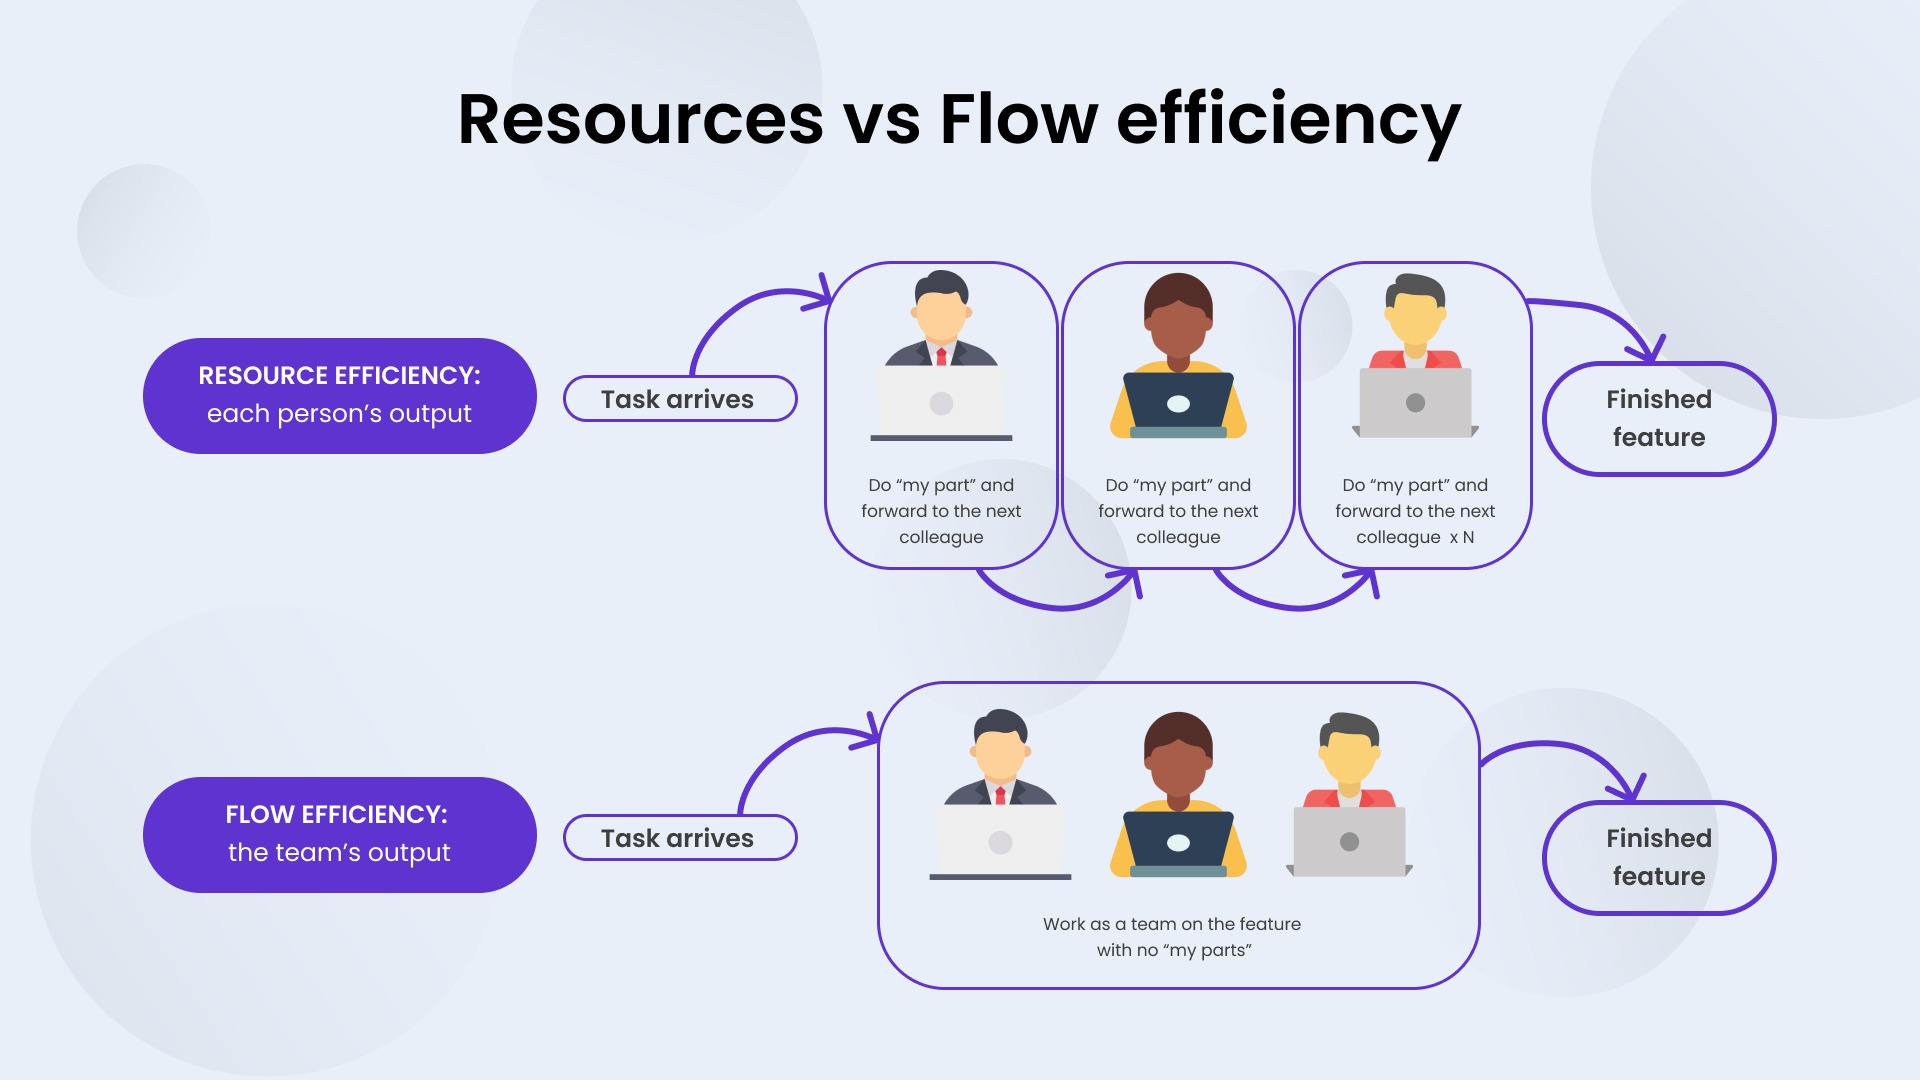 Resources vs Flow efficiency